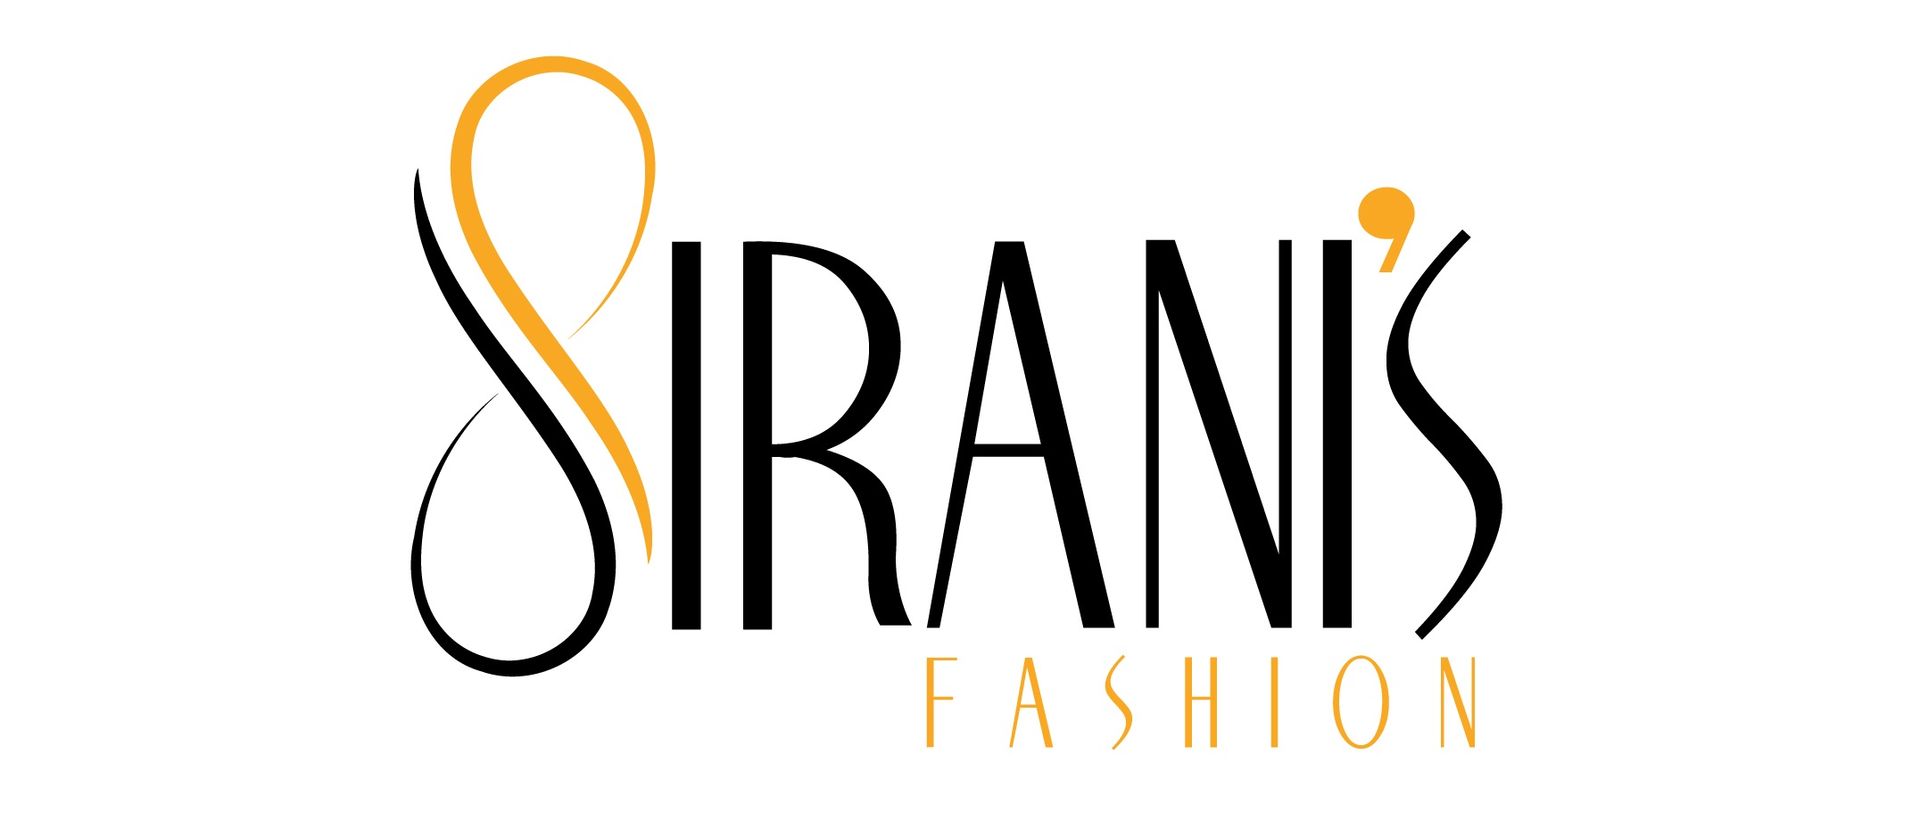 A logo for a fashion company called sirani 's fashion